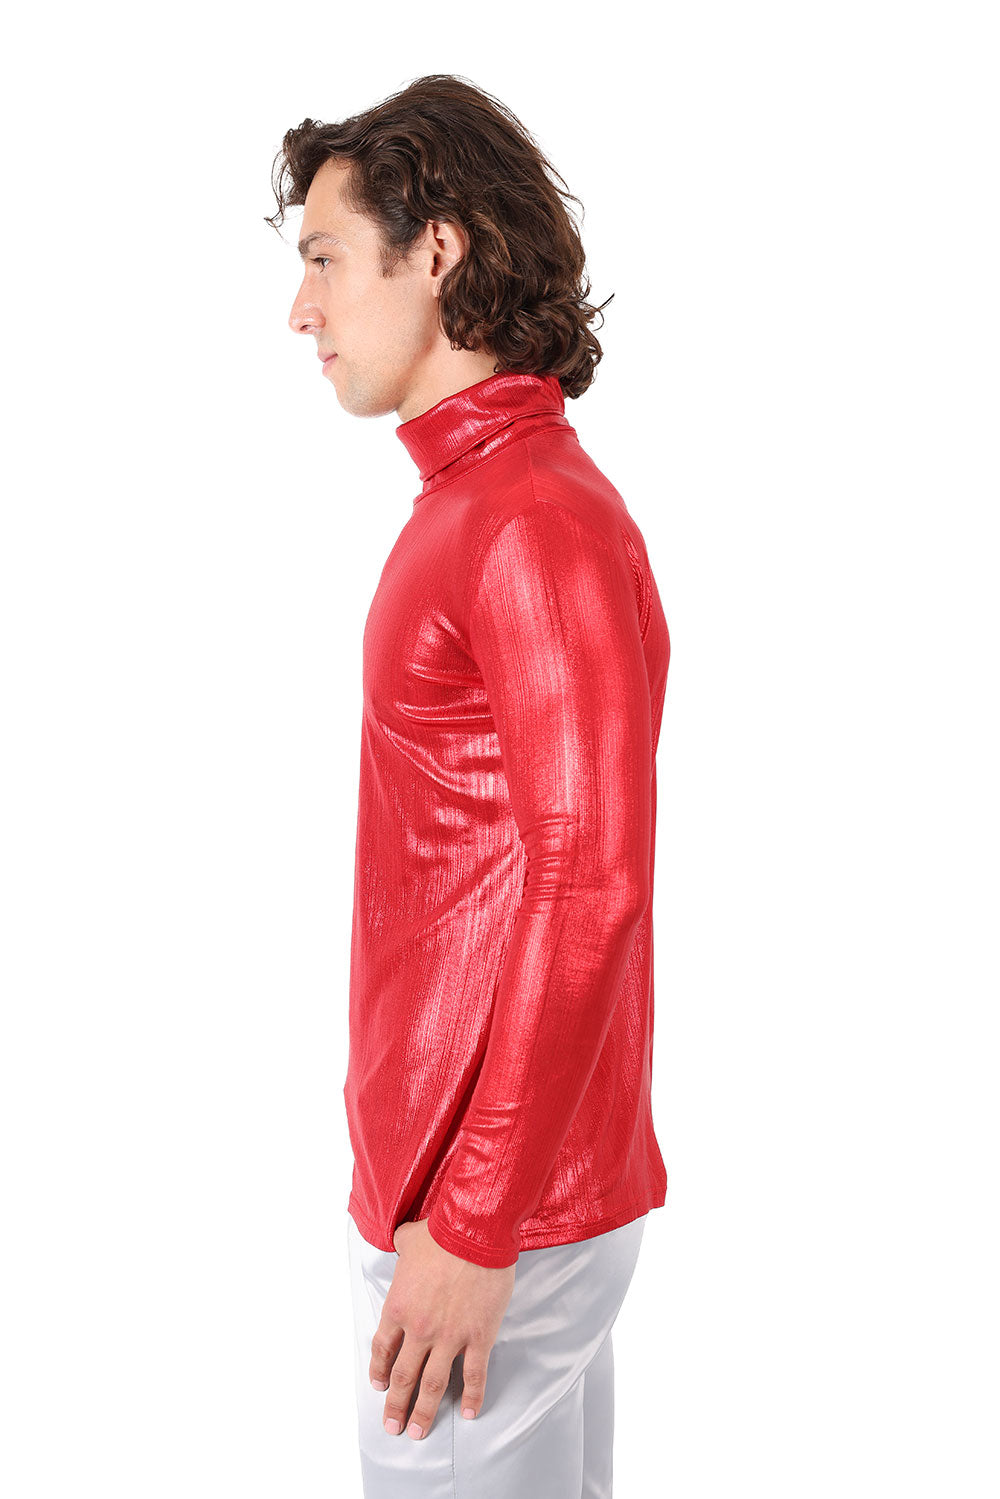 Barabas Men's Metallic Design Luxury Long Sleeve Shirt Sweater 2KT1000 Red